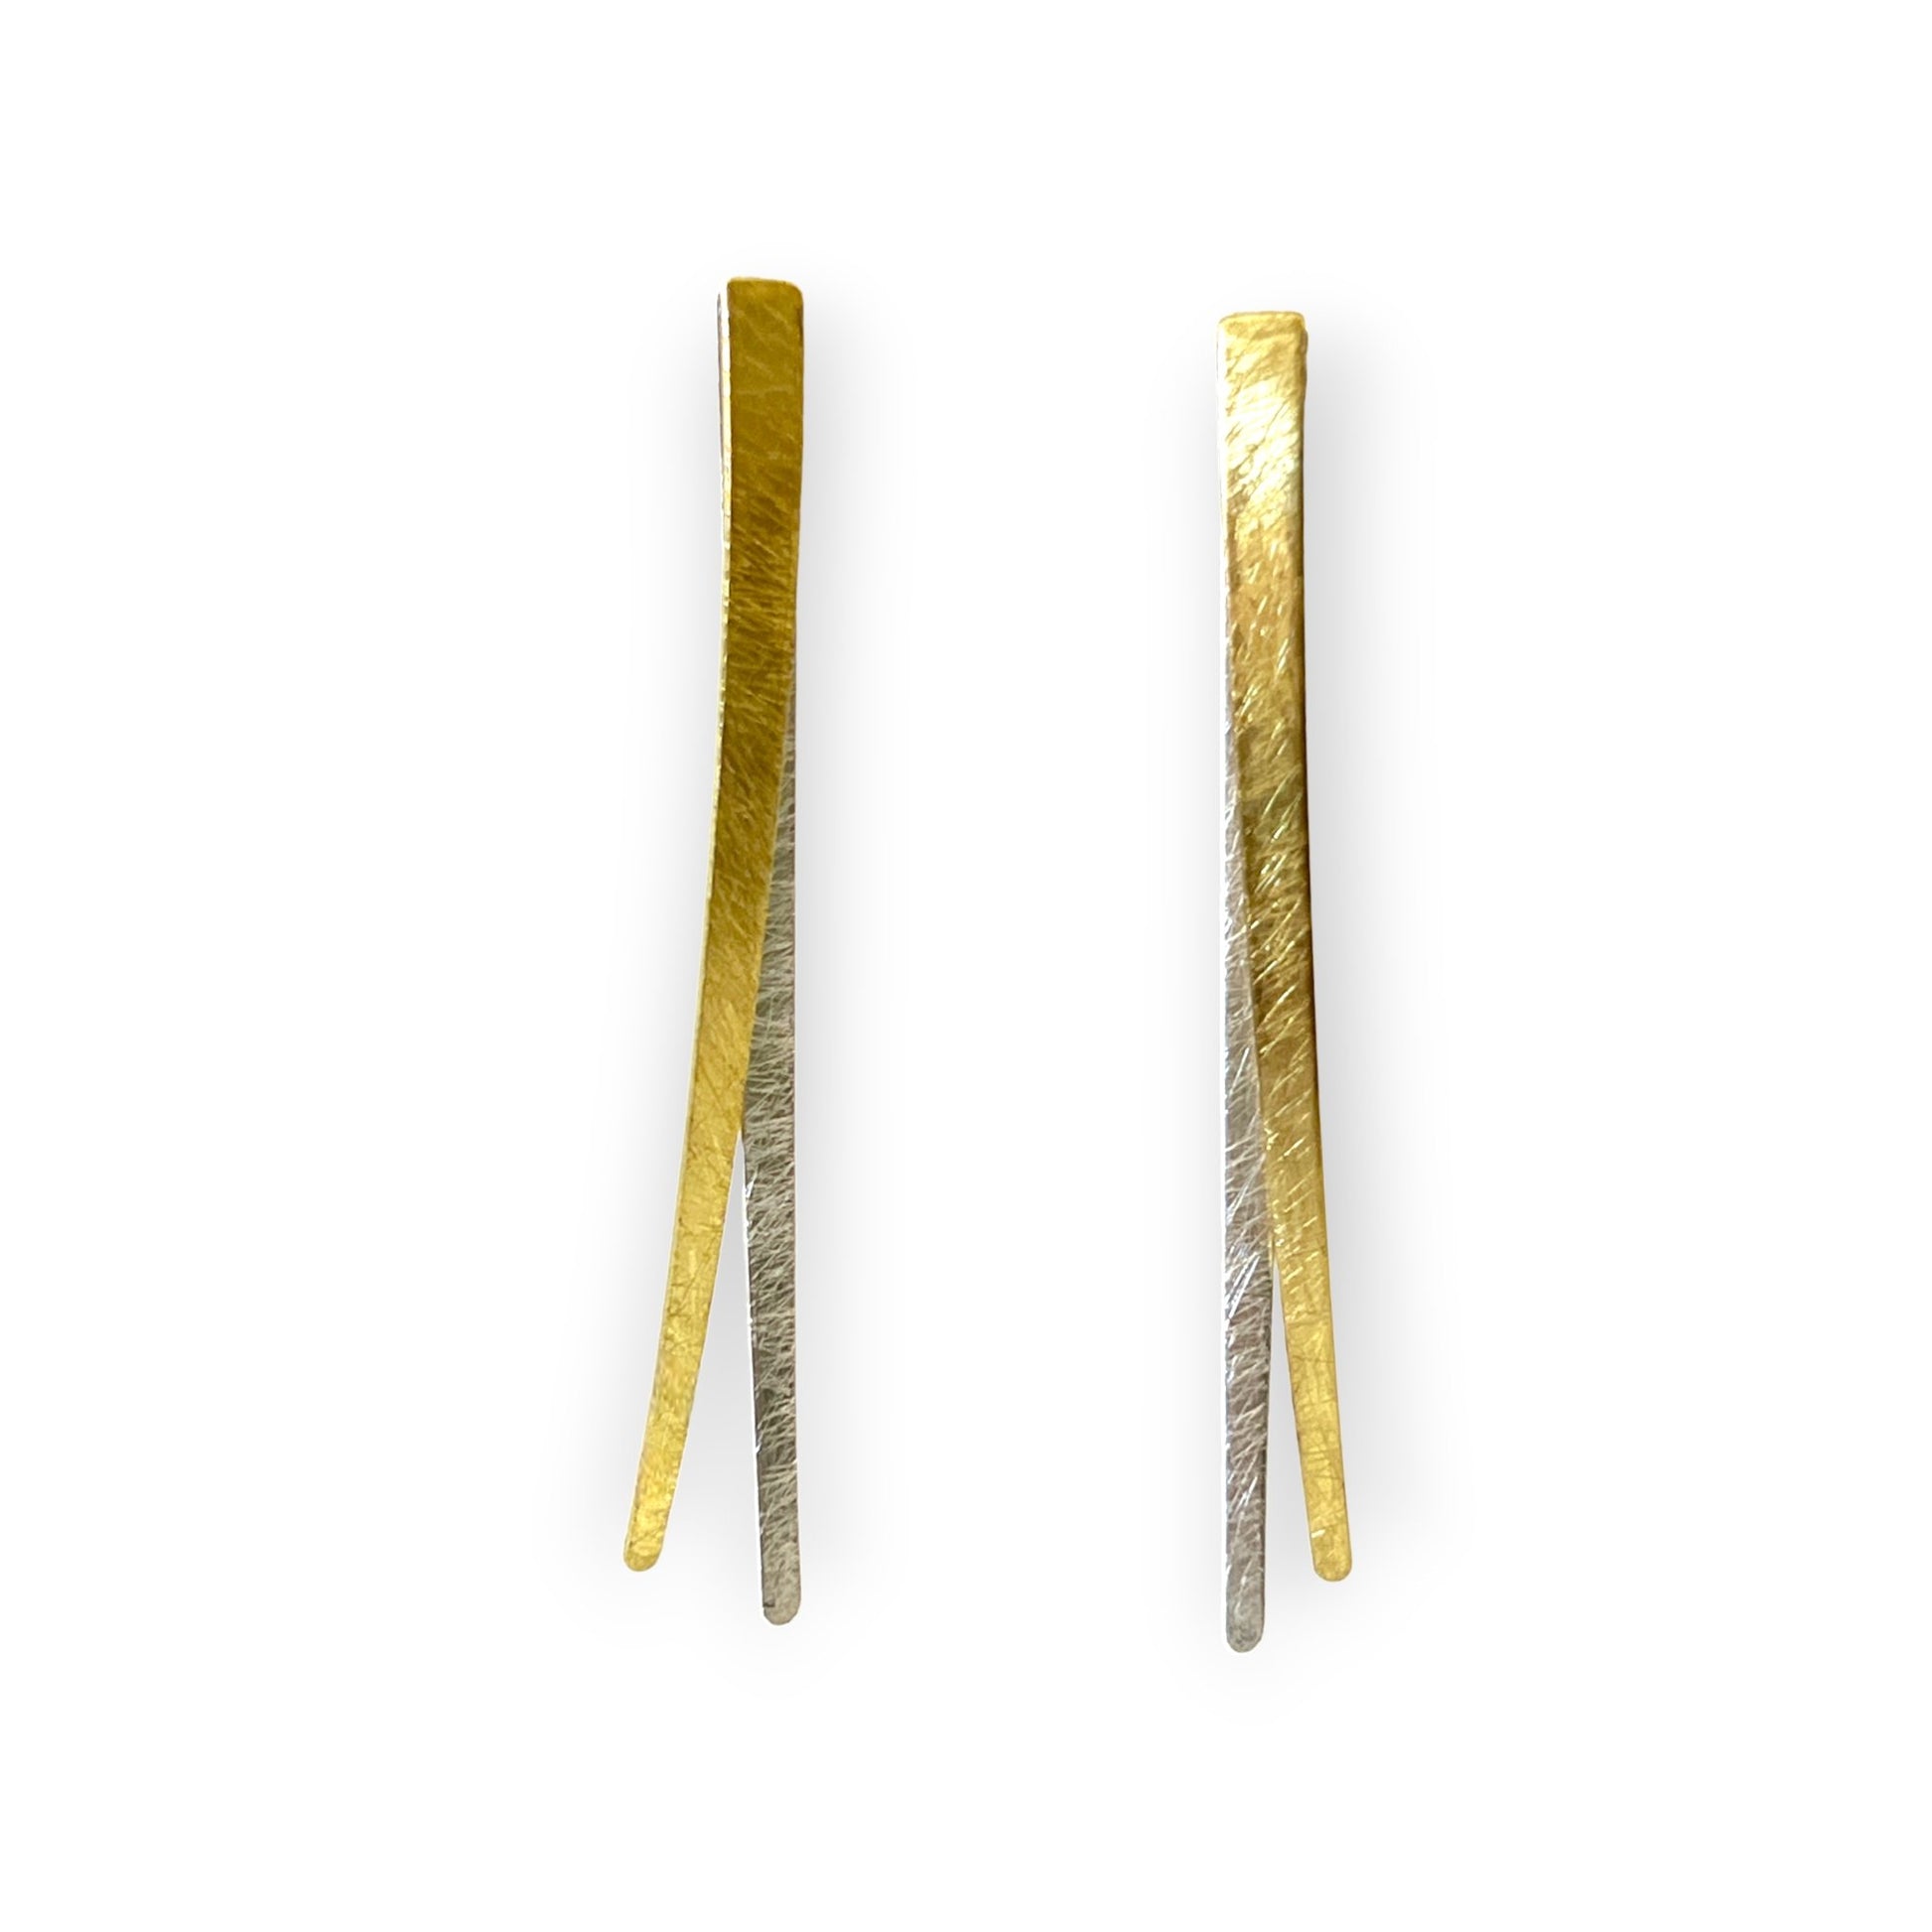 Customizable metal earrings of contrasting strips - Sundara Joon